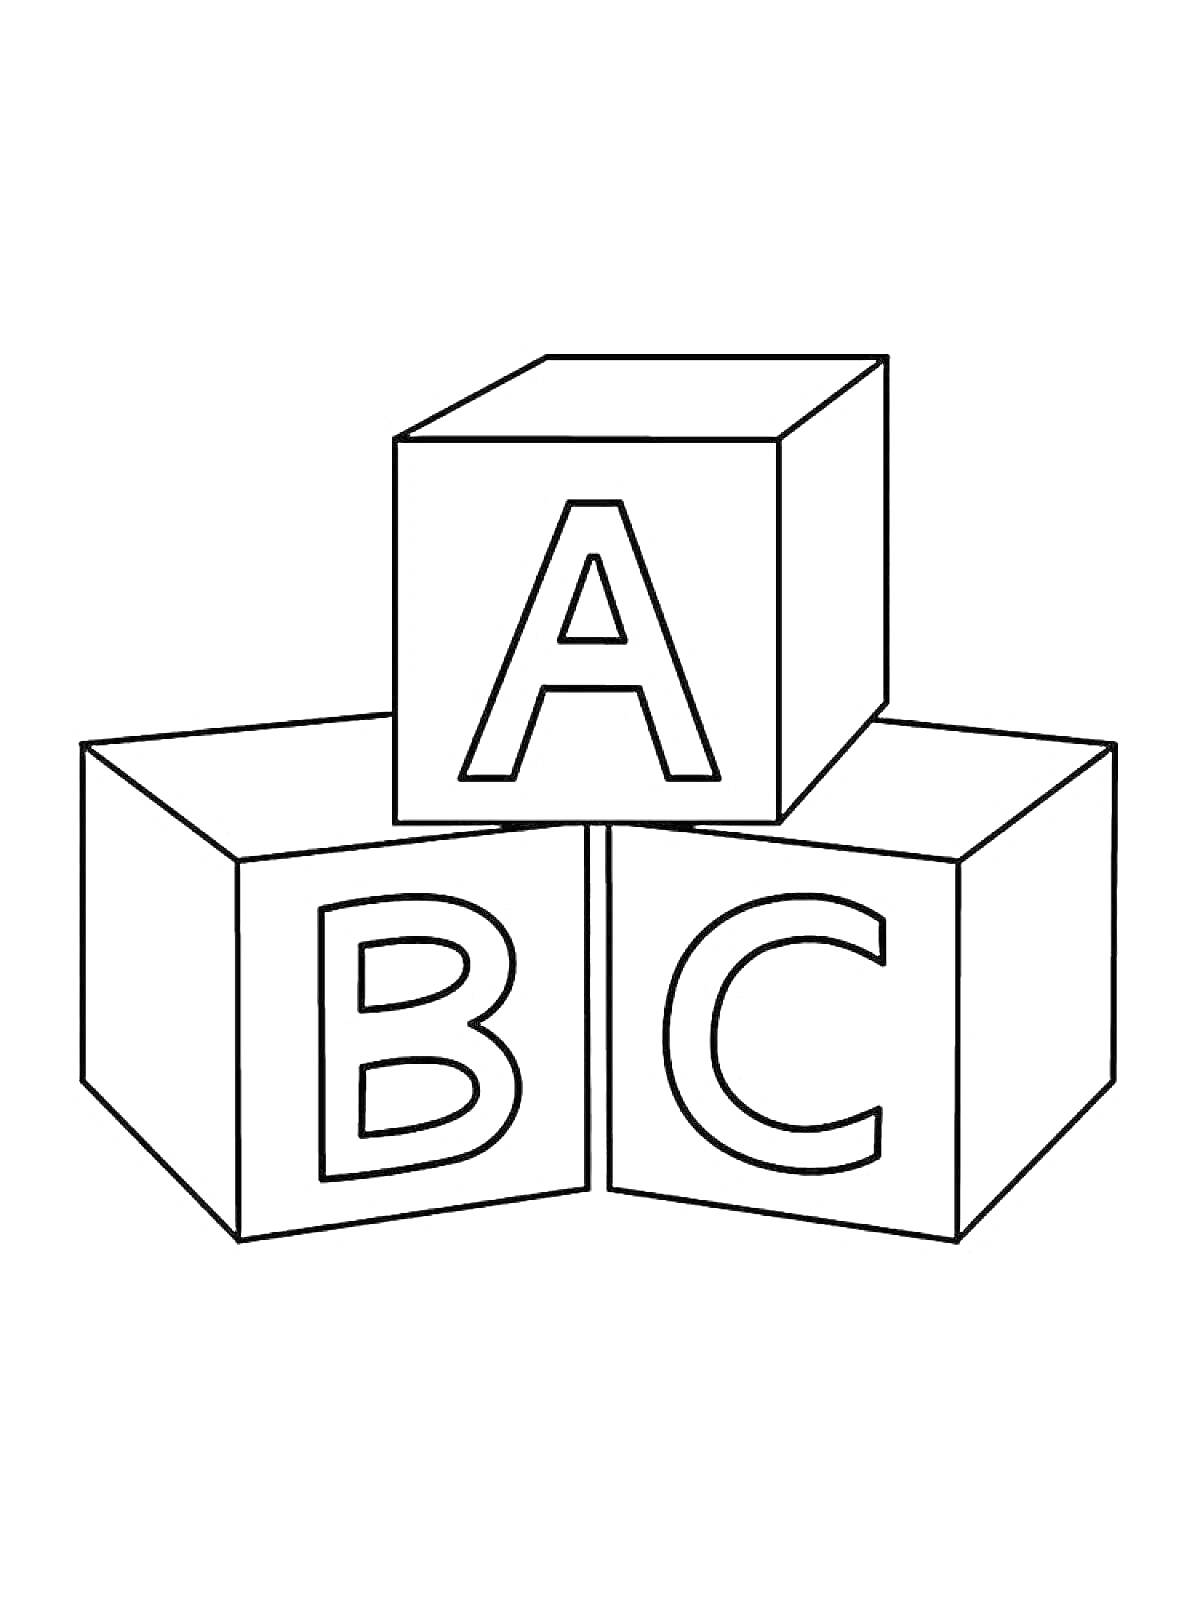 Раскраска Кубики с буквами A, B, C